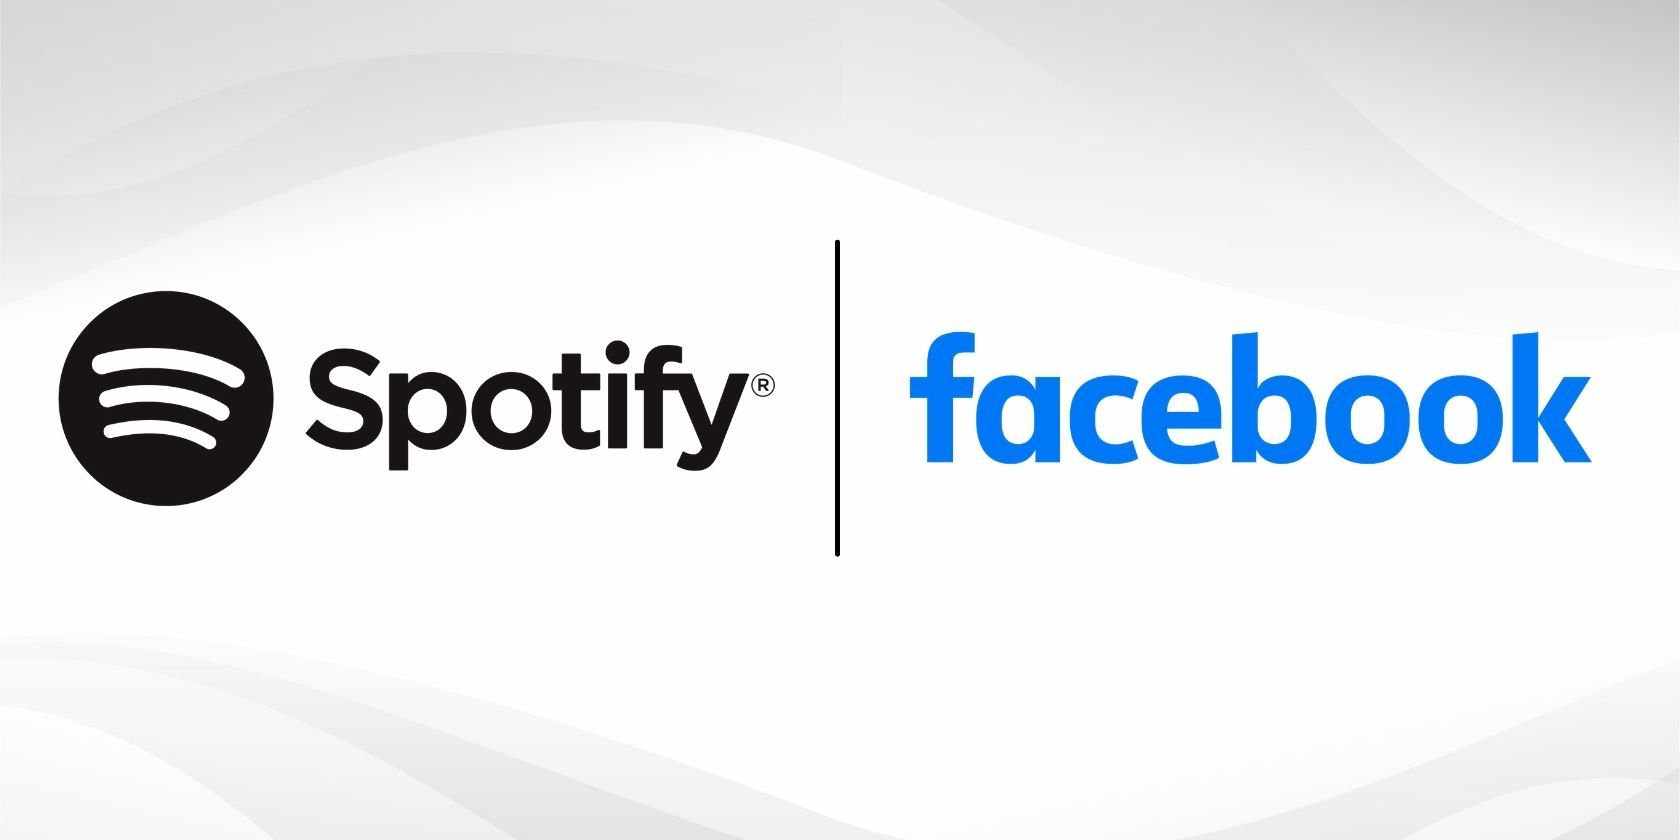 Spotify Miniplayer and Facebook logos